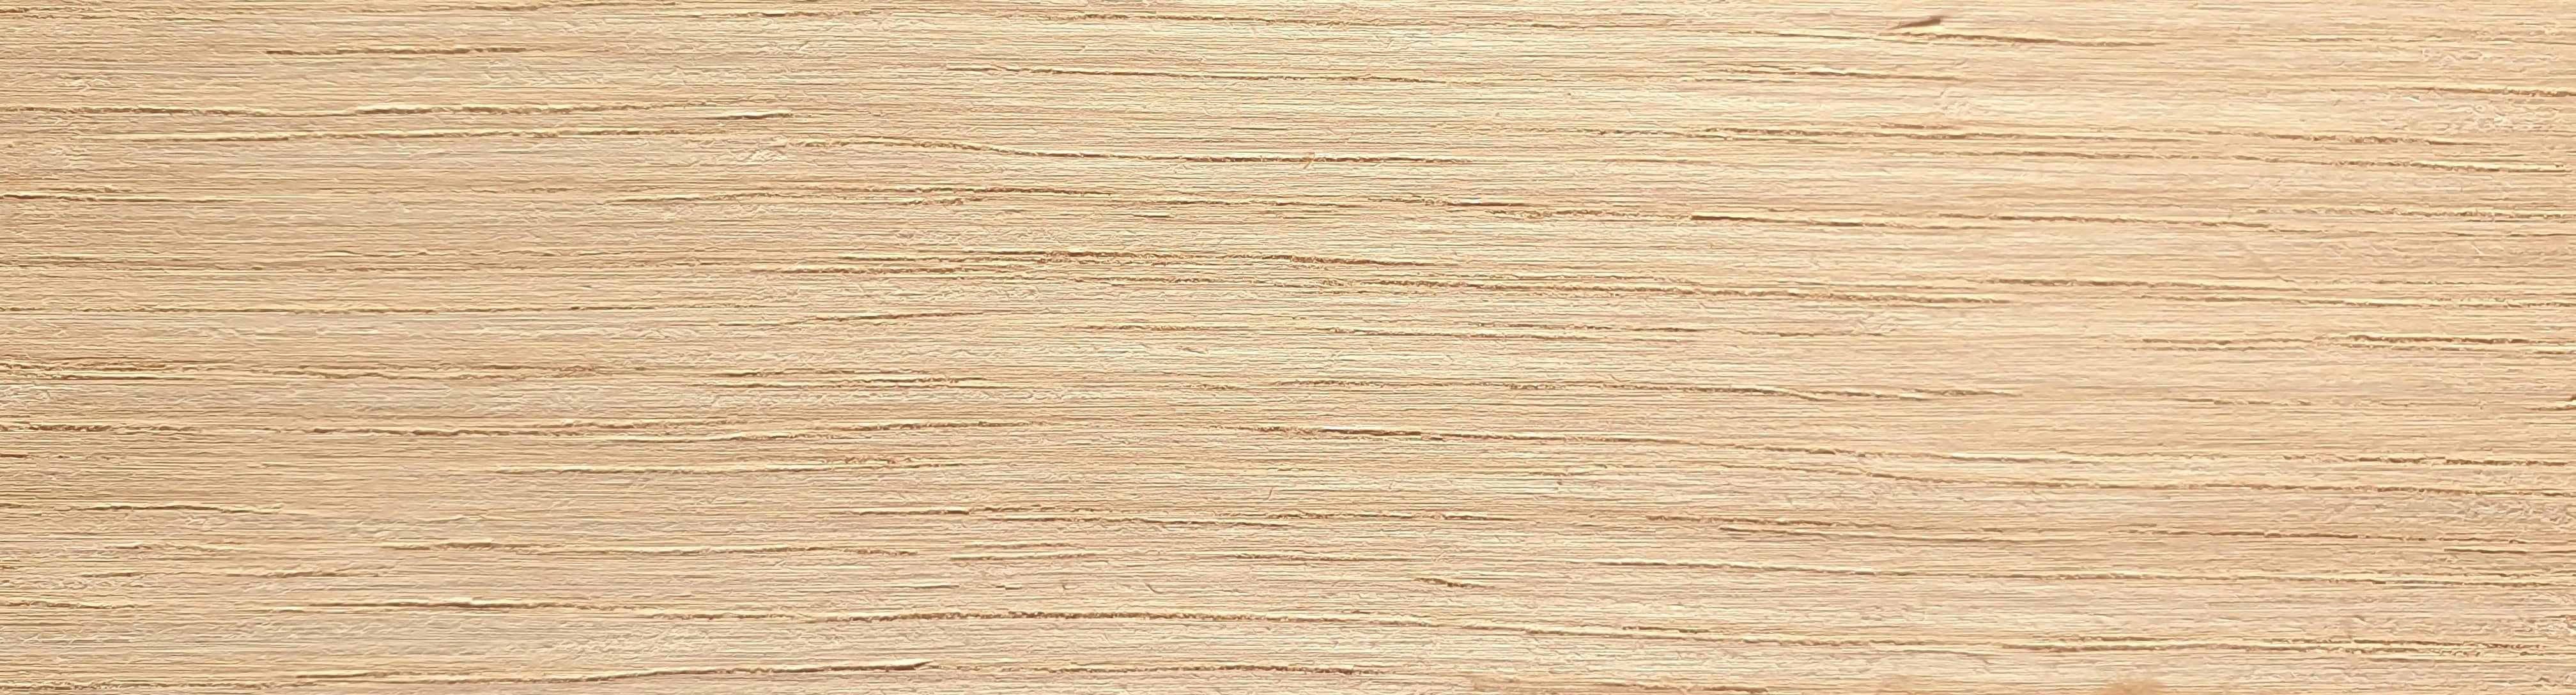 American White Oak Unglued Edging / Lipping 34mm x 2mm Thick Oak Wood Edging